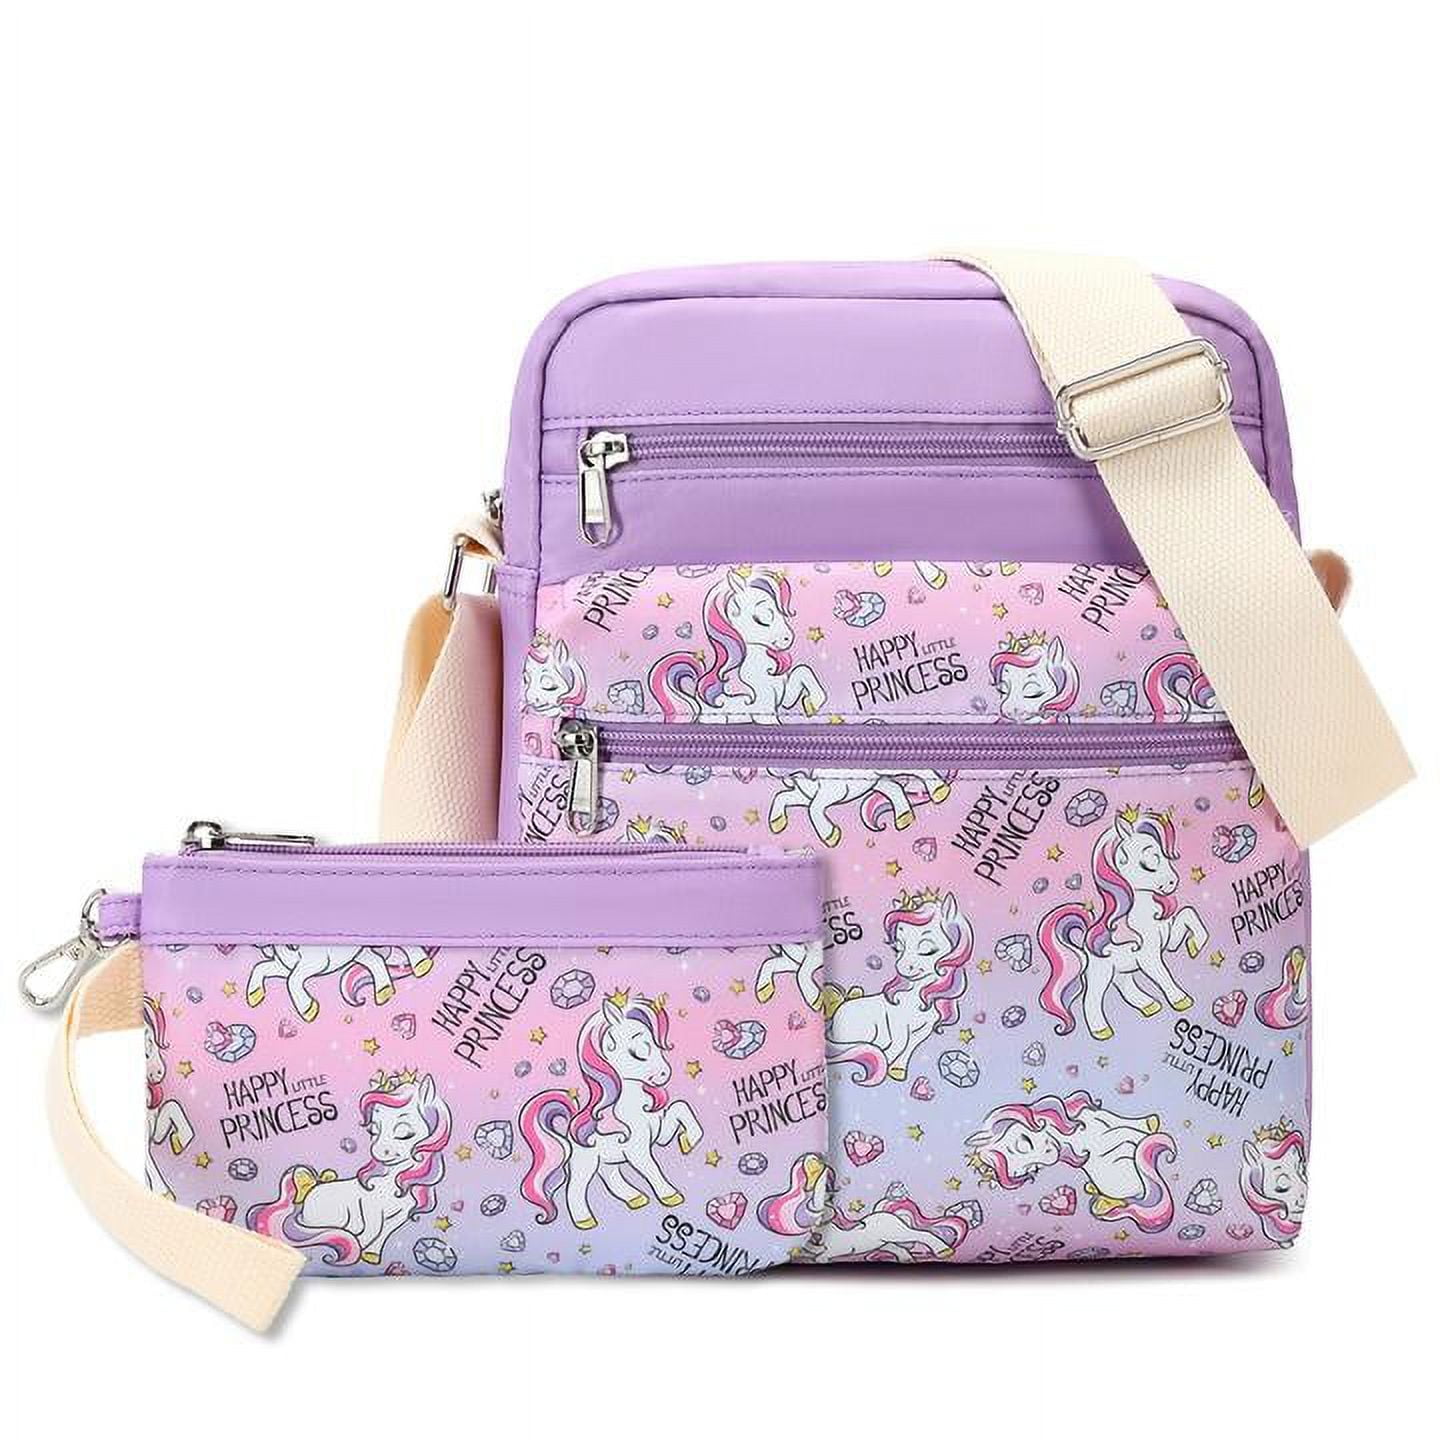 Buy DEEKEY Little Girls Purses for Kids - Toddler Mini Cute Princess  Handbags Shoulder Messenger Bag Toys Gifts Crossbody Purse (Butterfly Purple)  at .in